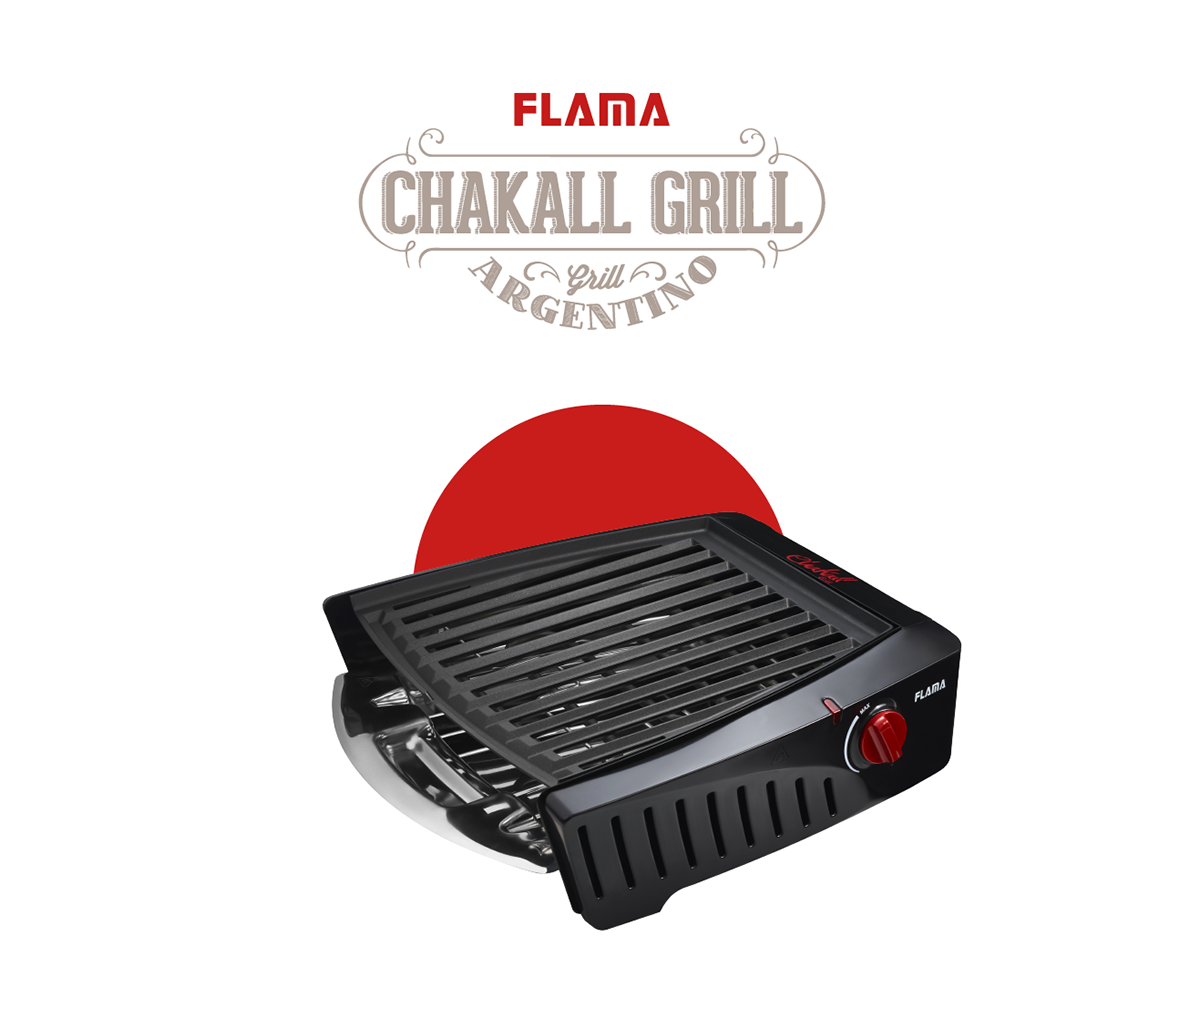 Chakall Grill grill chakall flama Hot Portugal